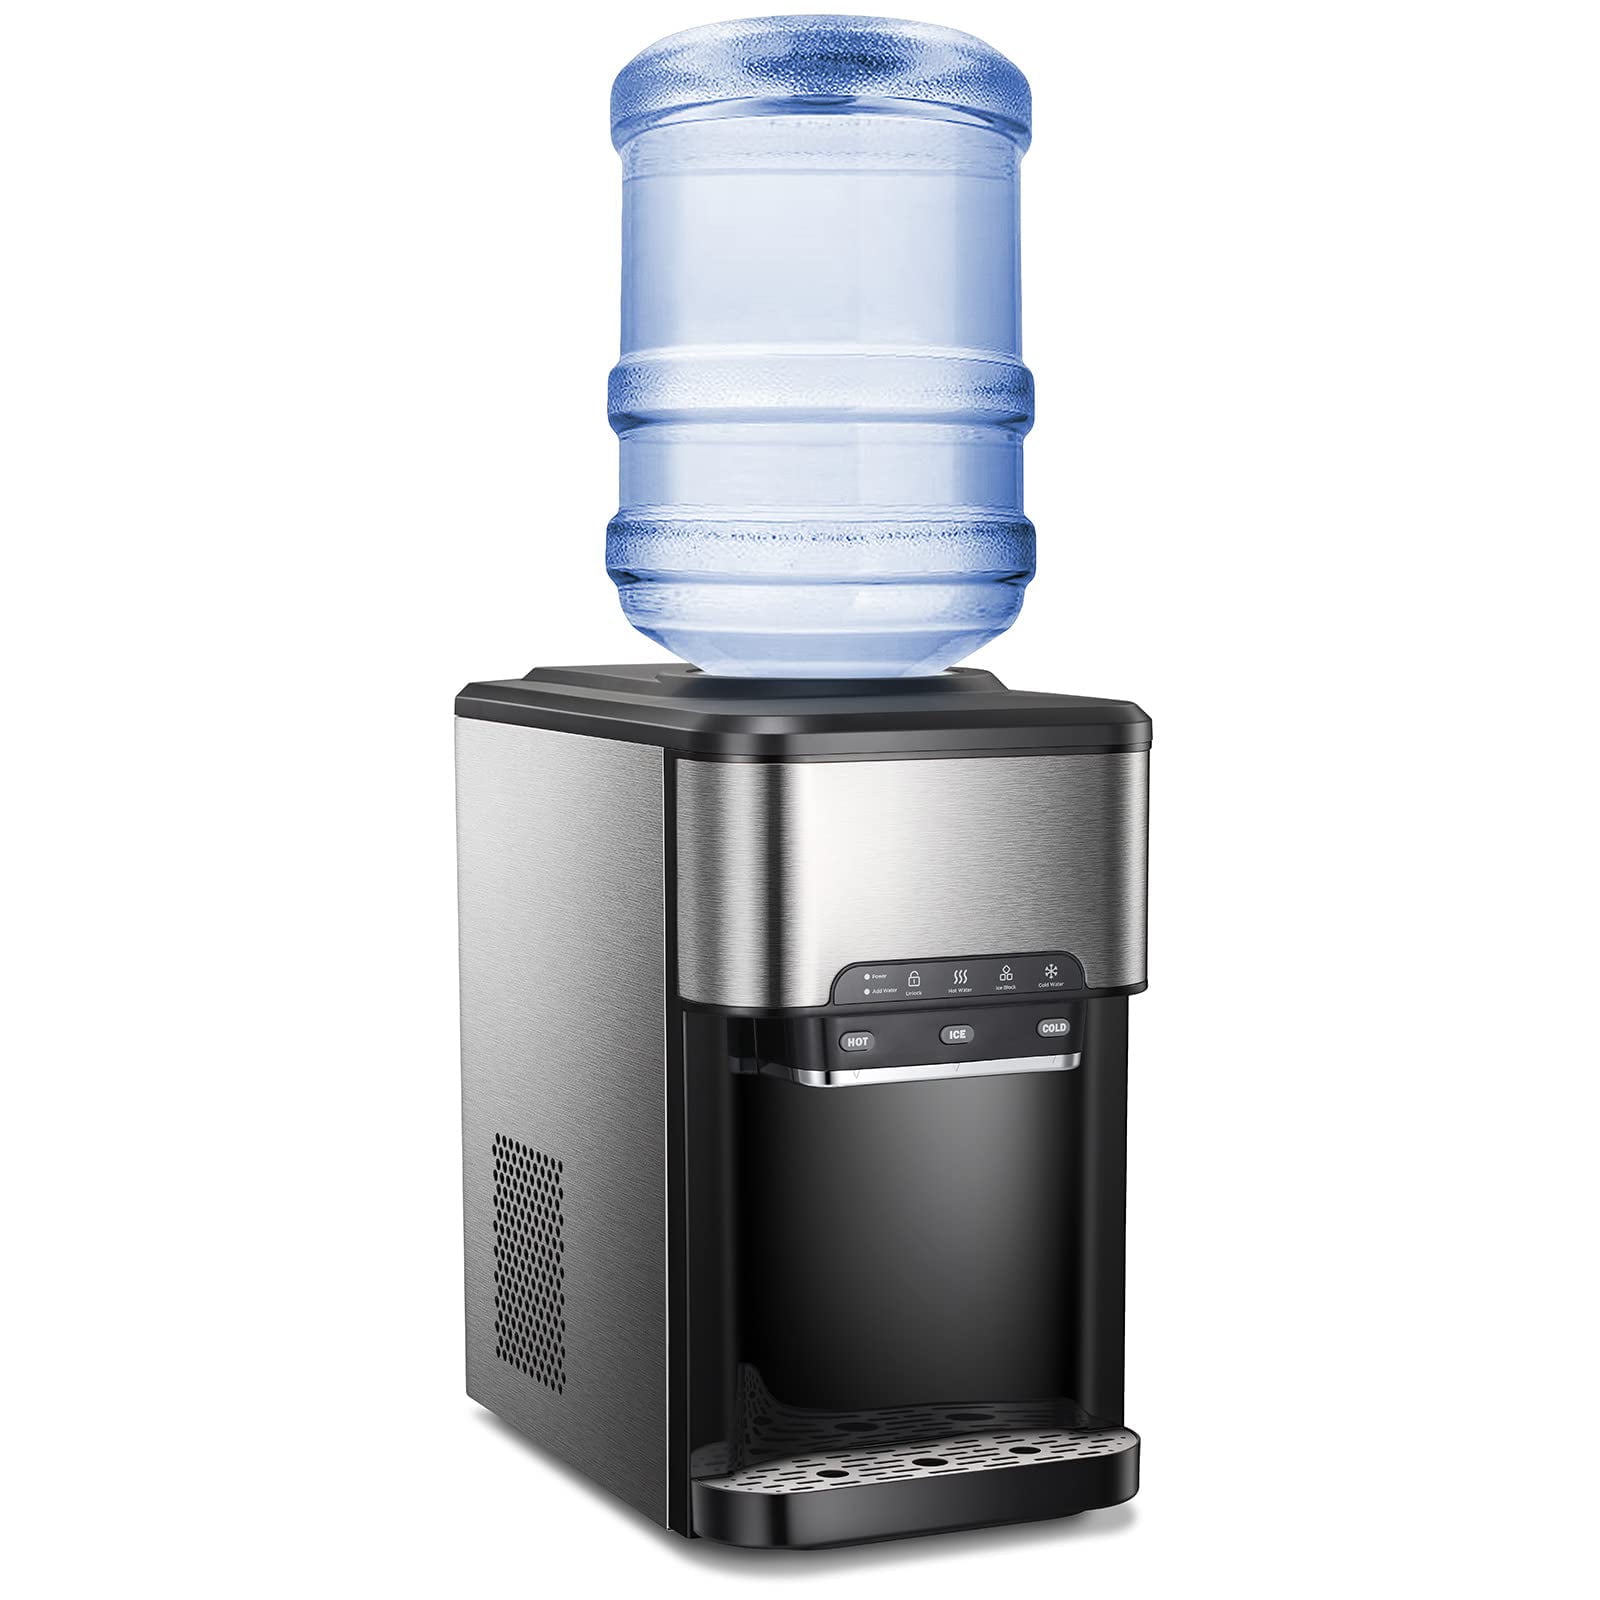 UMOMO Top Loading Water Cooler Dispenser, Countertop Water Cooler Dispenser  for Home and Office Use, Holds 3 or 5 Gallon Bottle, Hot & Cold Water